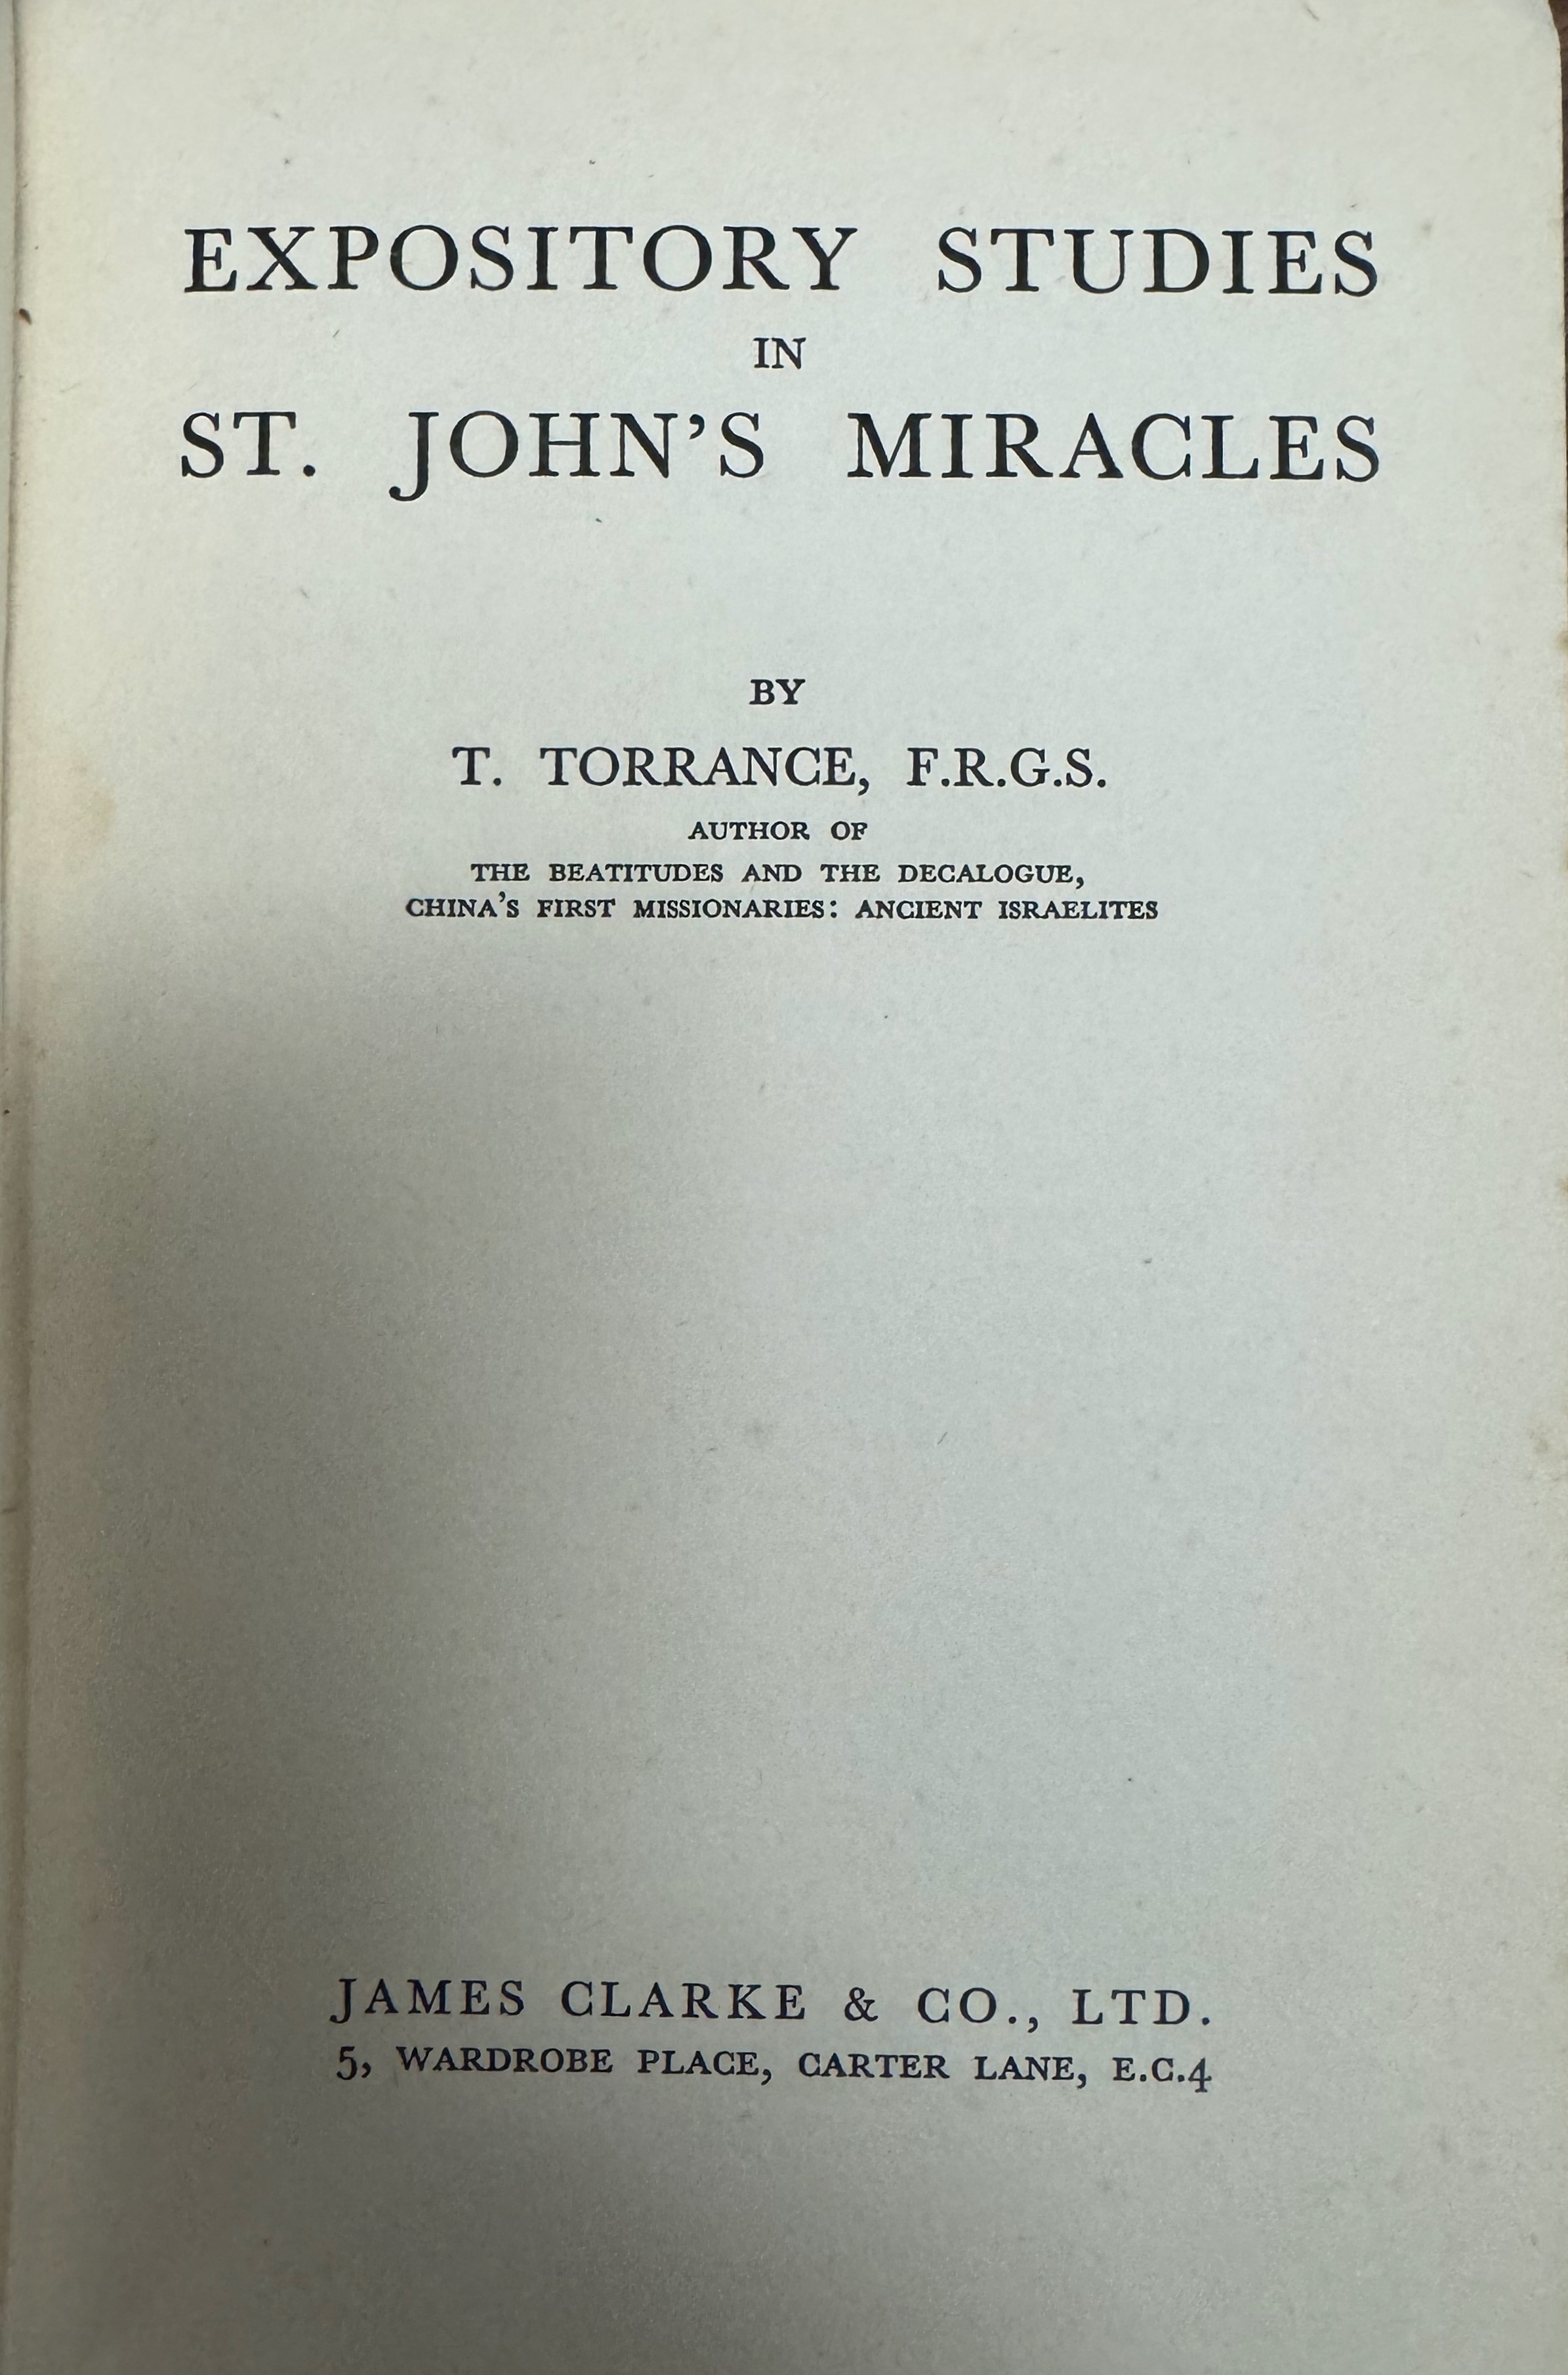 1938-TT-1 title page